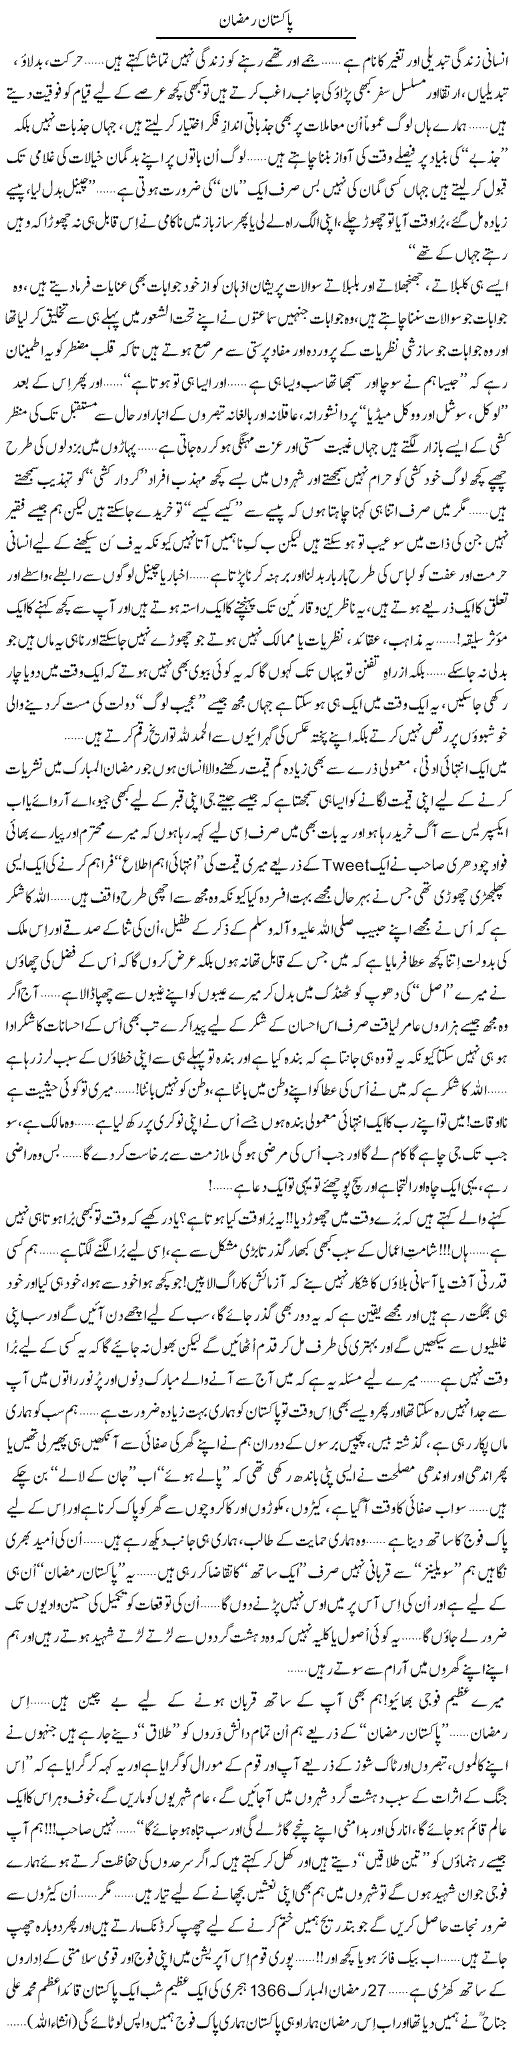 Pakistan Ramazan | Dr. Aamir Liaquat Hussain | Daily Urdu Columns